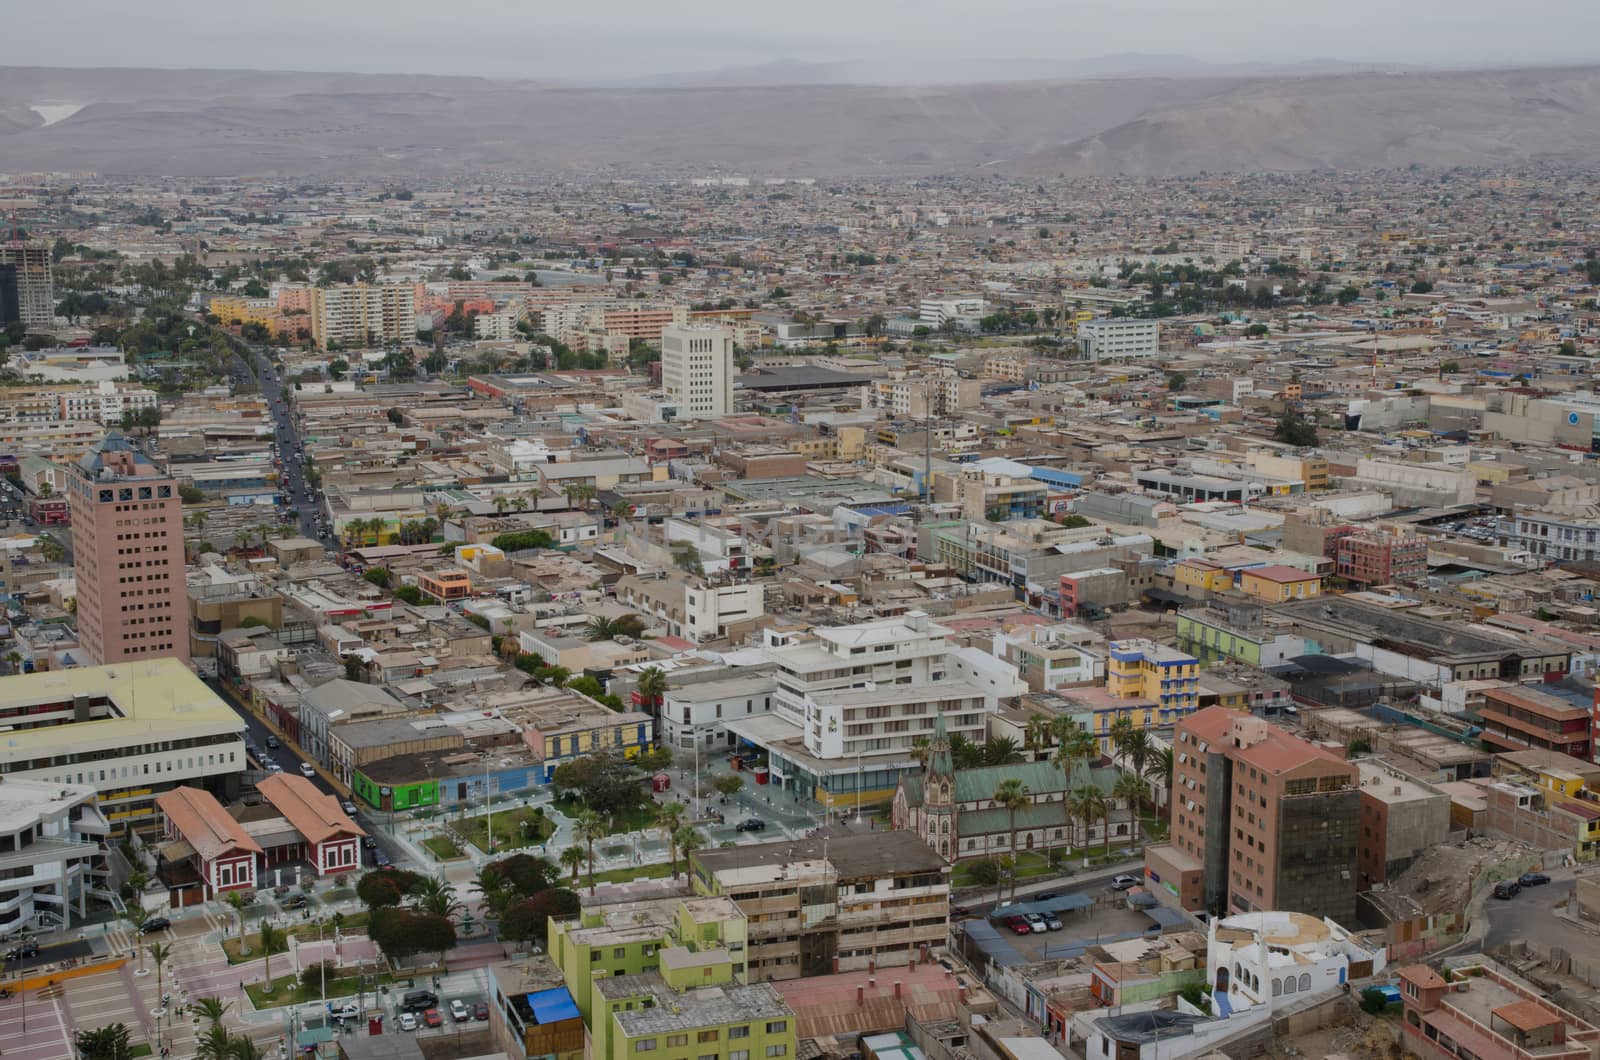 City of Arica in the Arica y Parinacota Region. by VictorSuarez